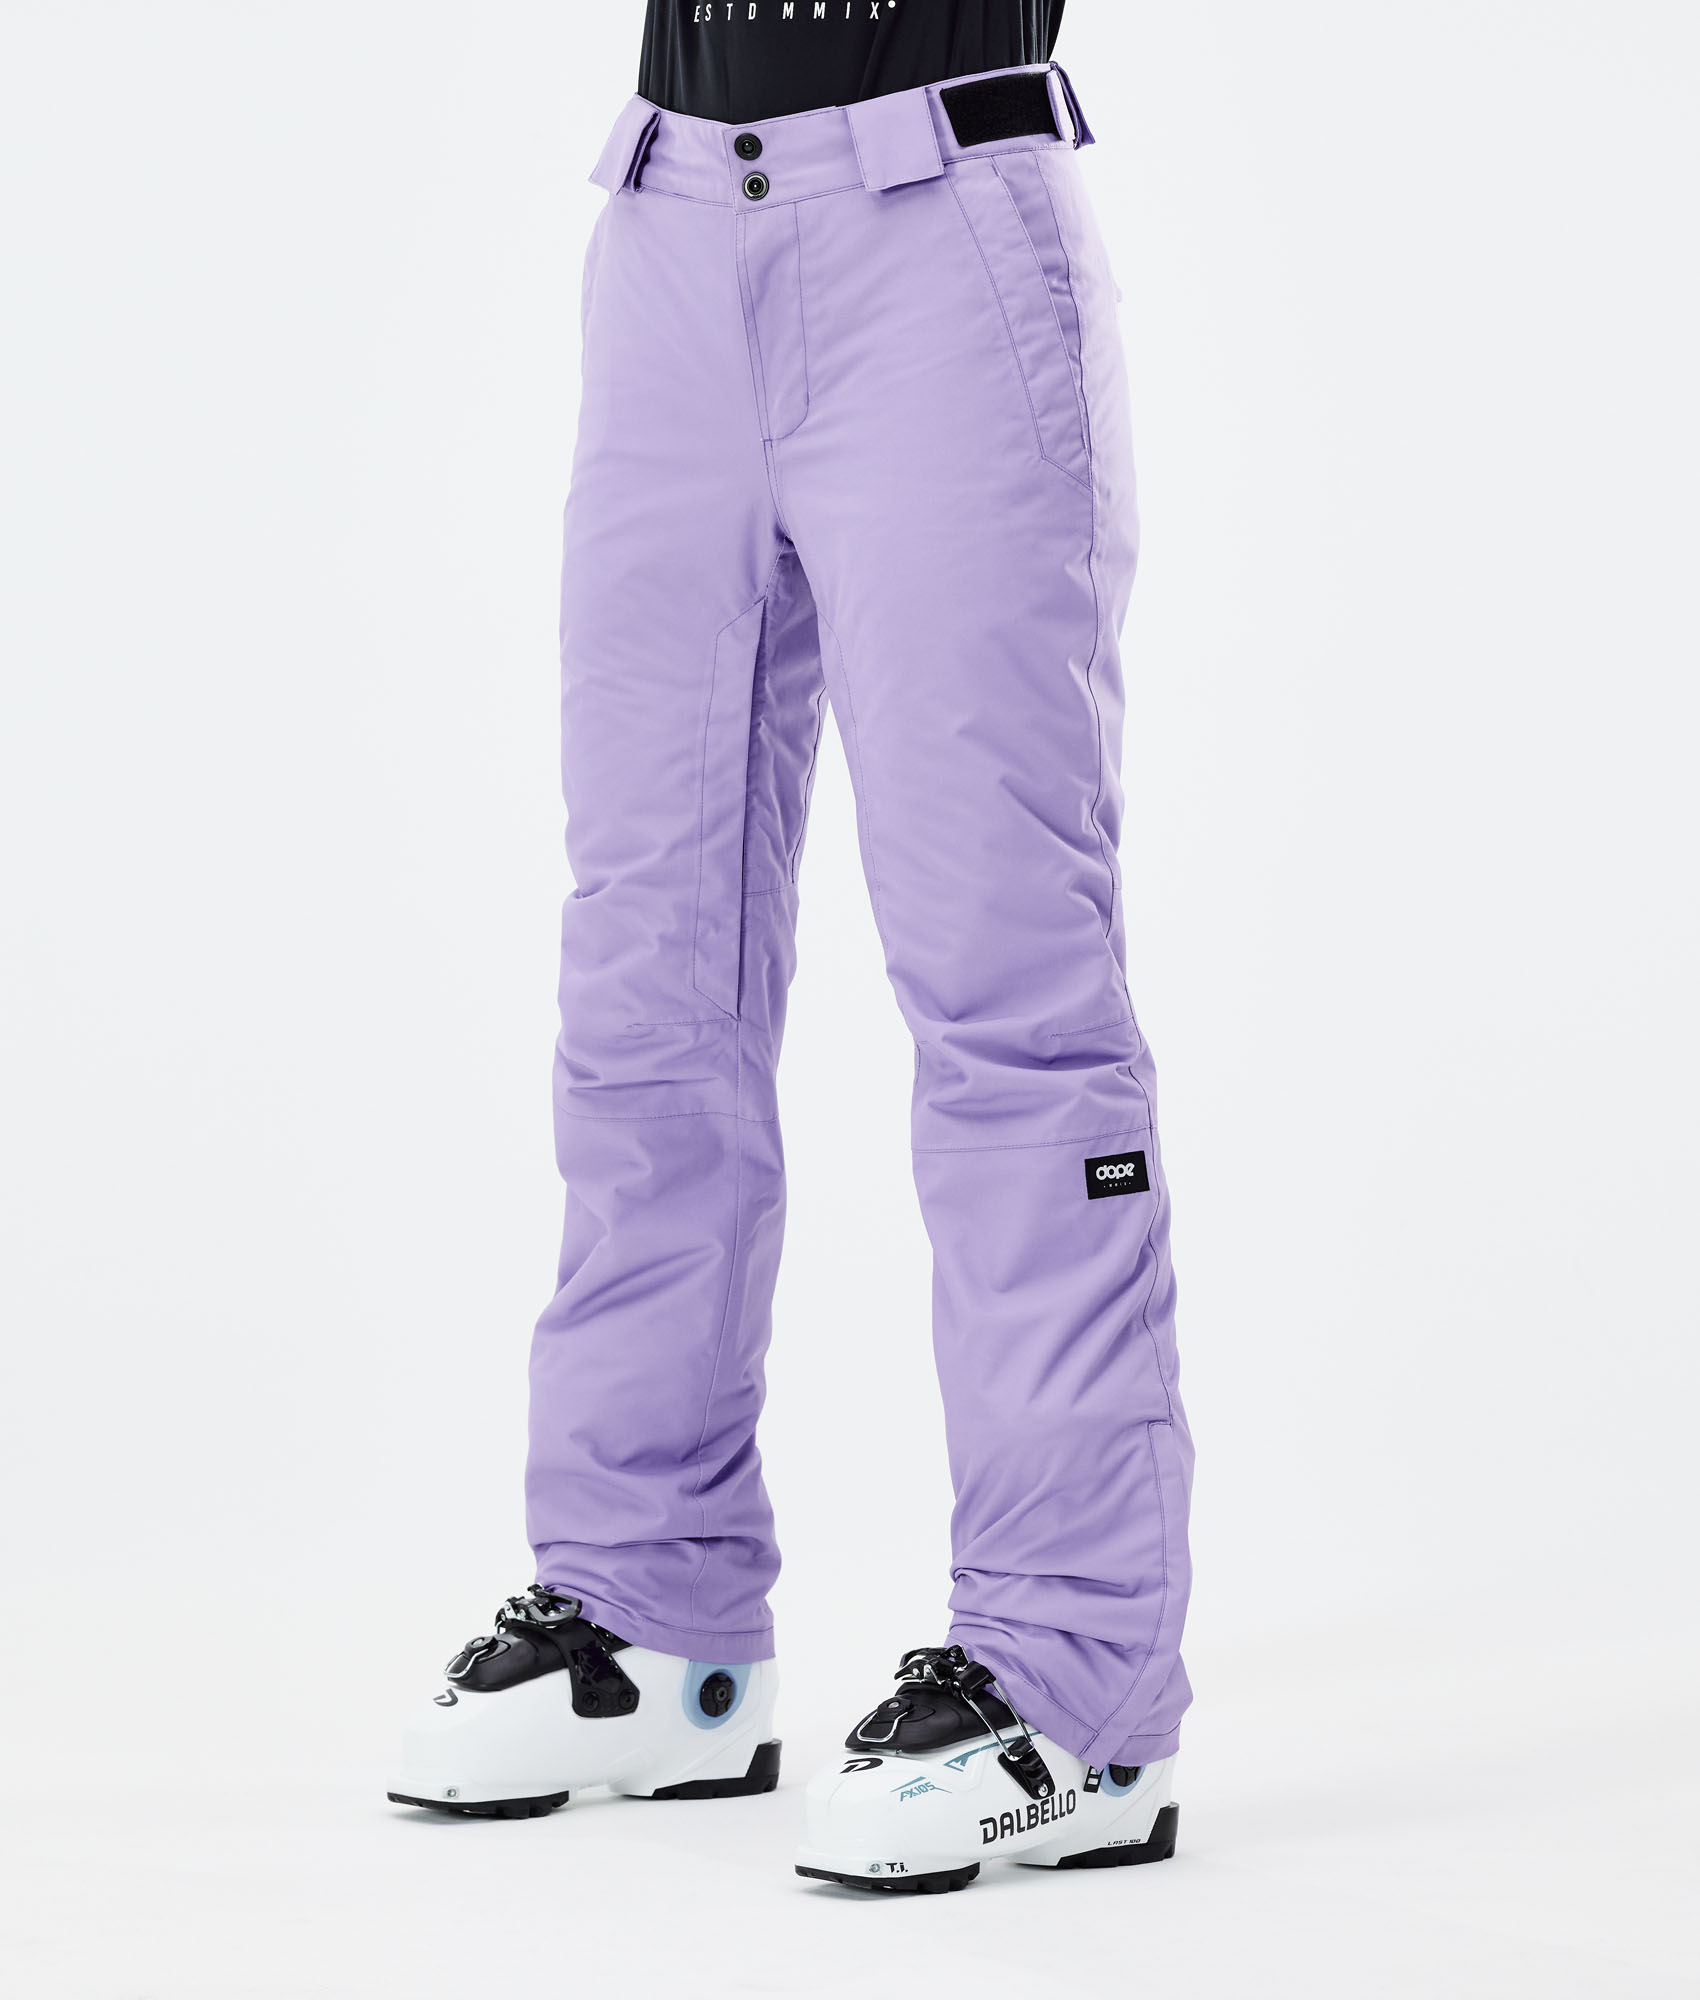 Empyre Pants Women Medium Purple Snowboarding Ski Cargo 10000 MM